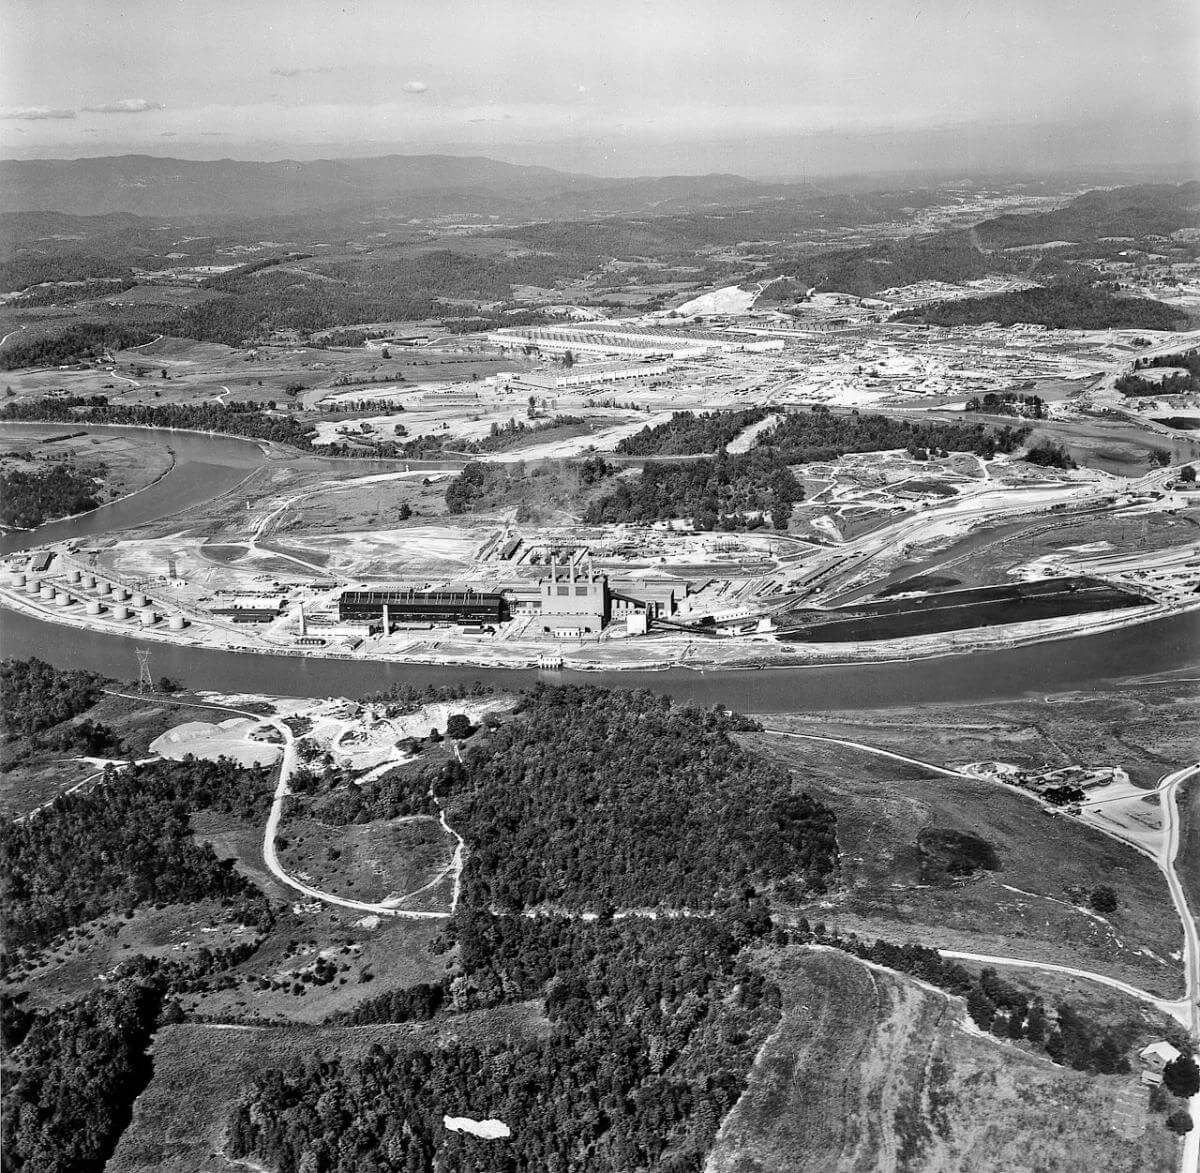 K-25 aerial photo, Oak Ridge, TN, ca. 1945. Photo by Ed Westcott. Courtesy of Wikimedia Commons. Image is in public domain.